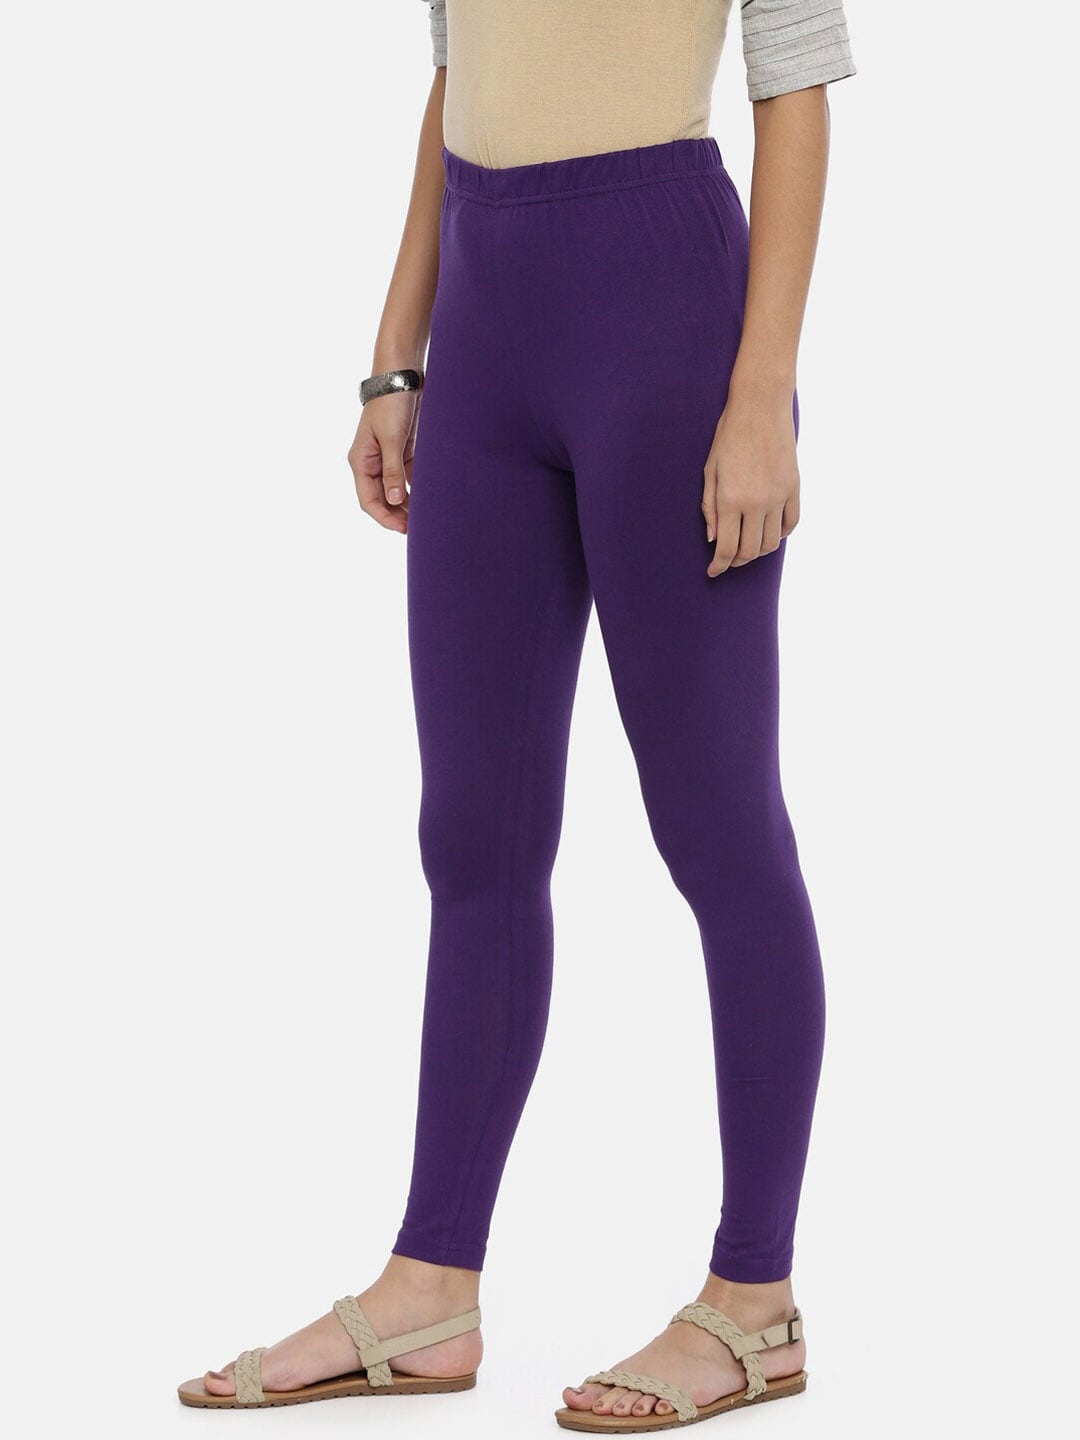 Buy Souchii Violet Solid Slim-Fit Ankle-Length Leggings Online at